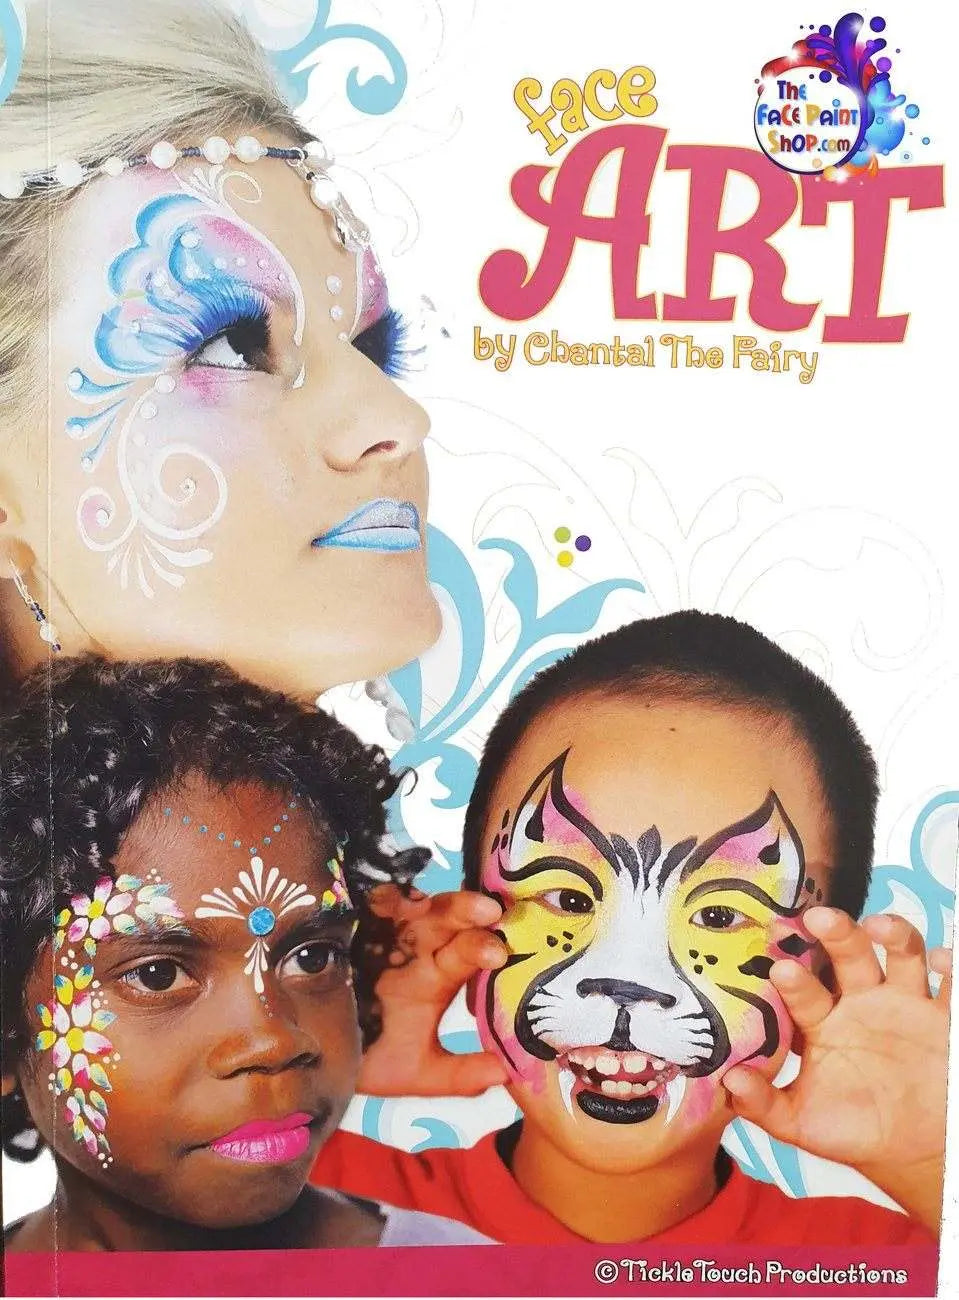 Book of Face Art by Chantal Fairy - Beginners Face Painting The Face Paint Shop Books The Face Paint Shop Australia buy face paints near me